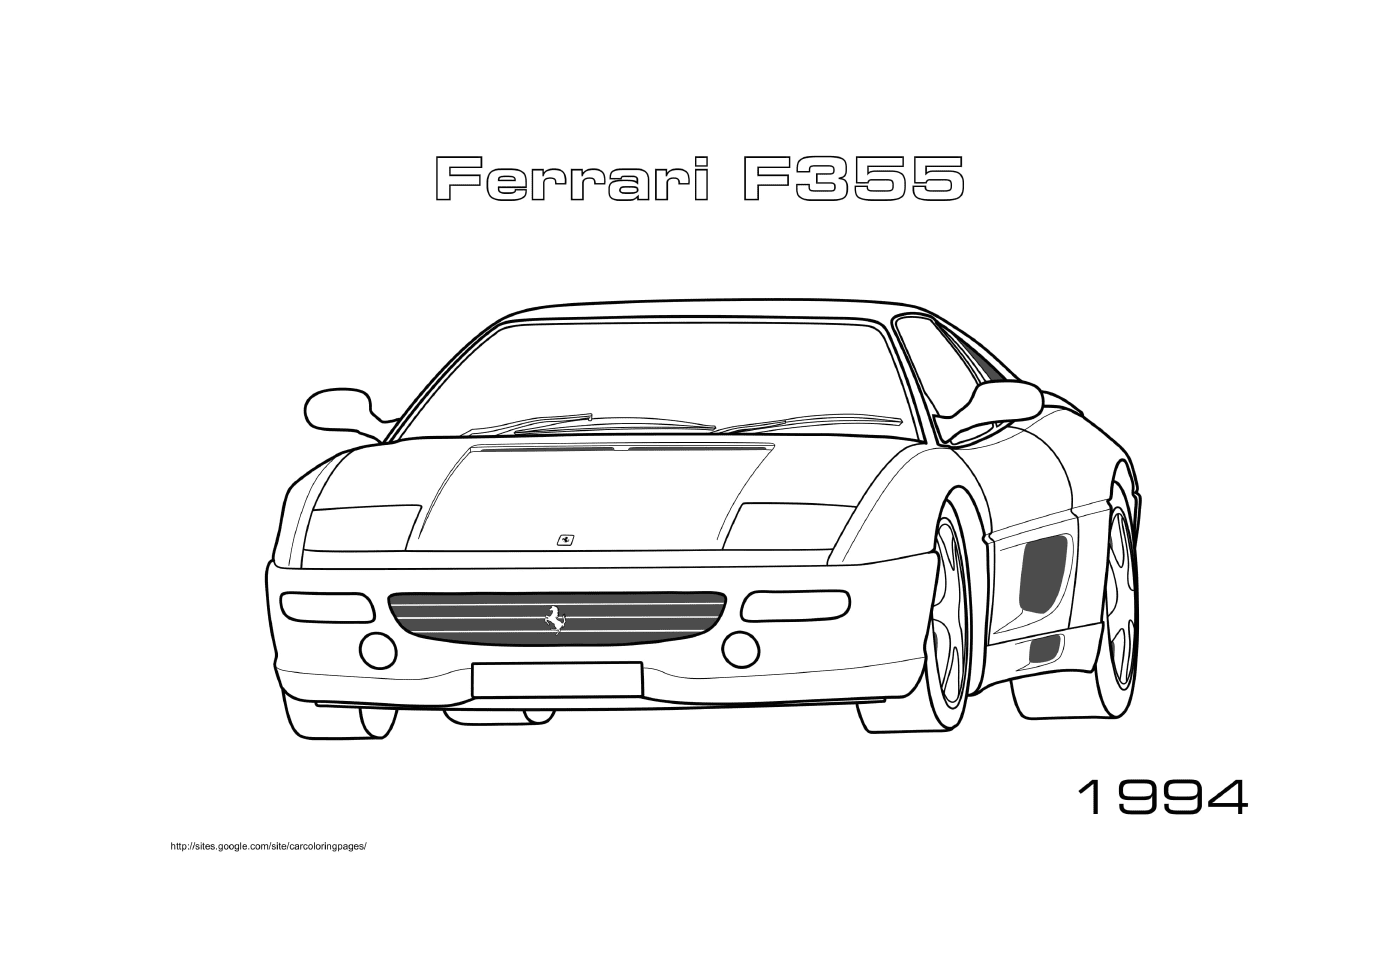  Ferrari car F355 1994 